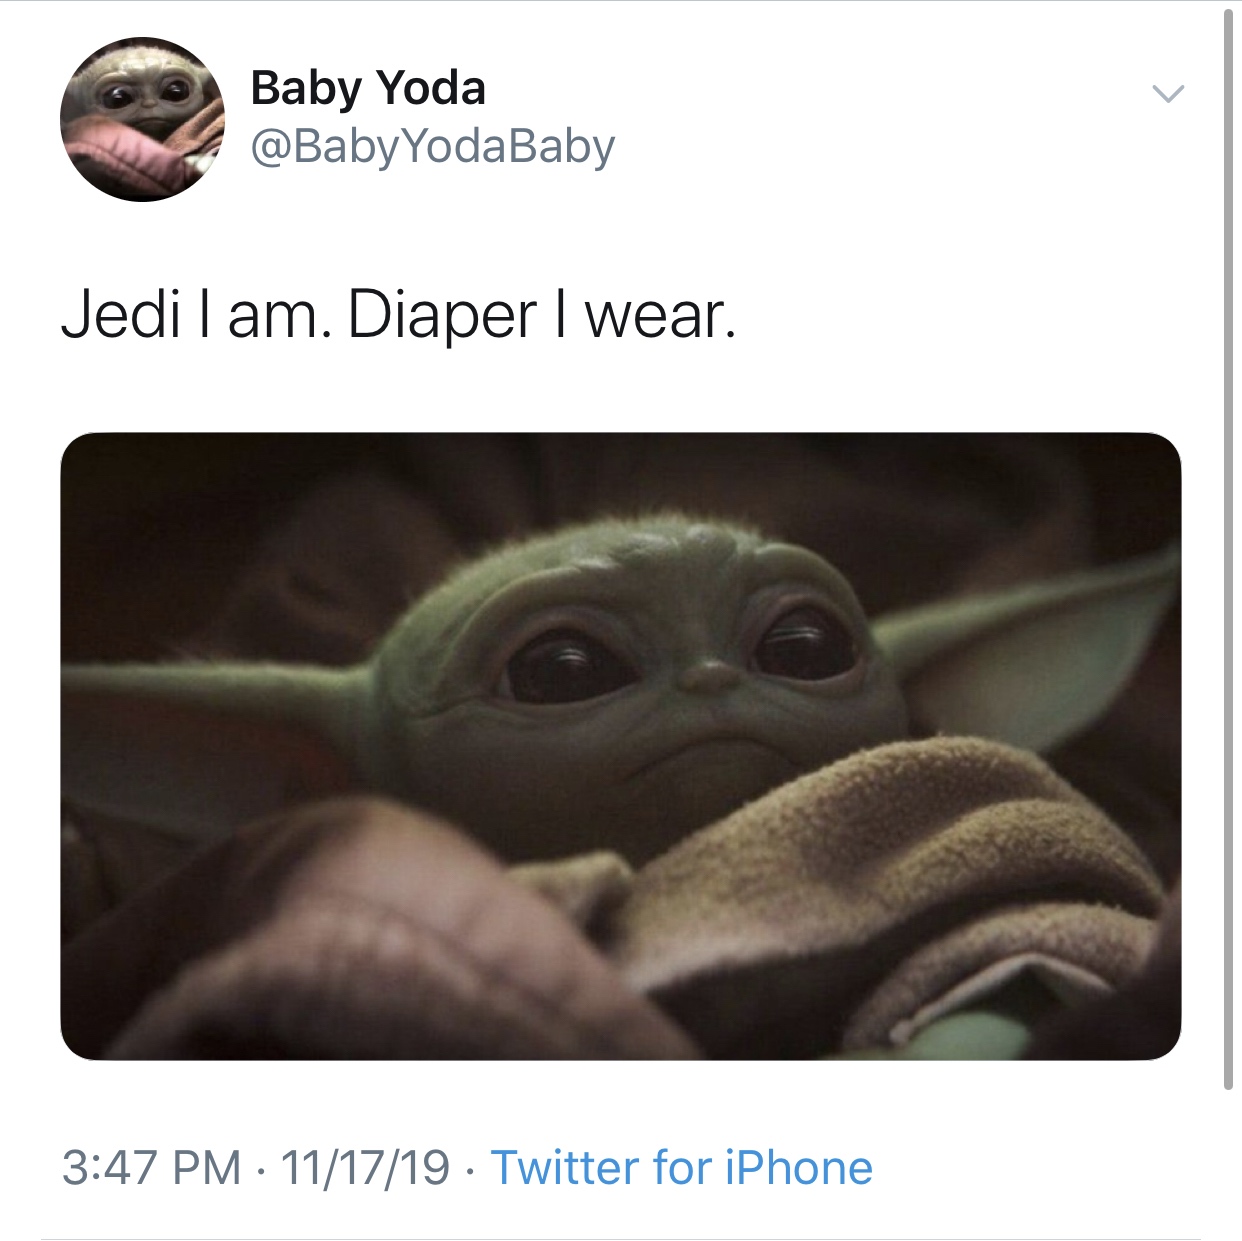 baby yoda meme - Baby Yoda Jedi lam. Diaper I wear. 111719. Twitter for iPhone